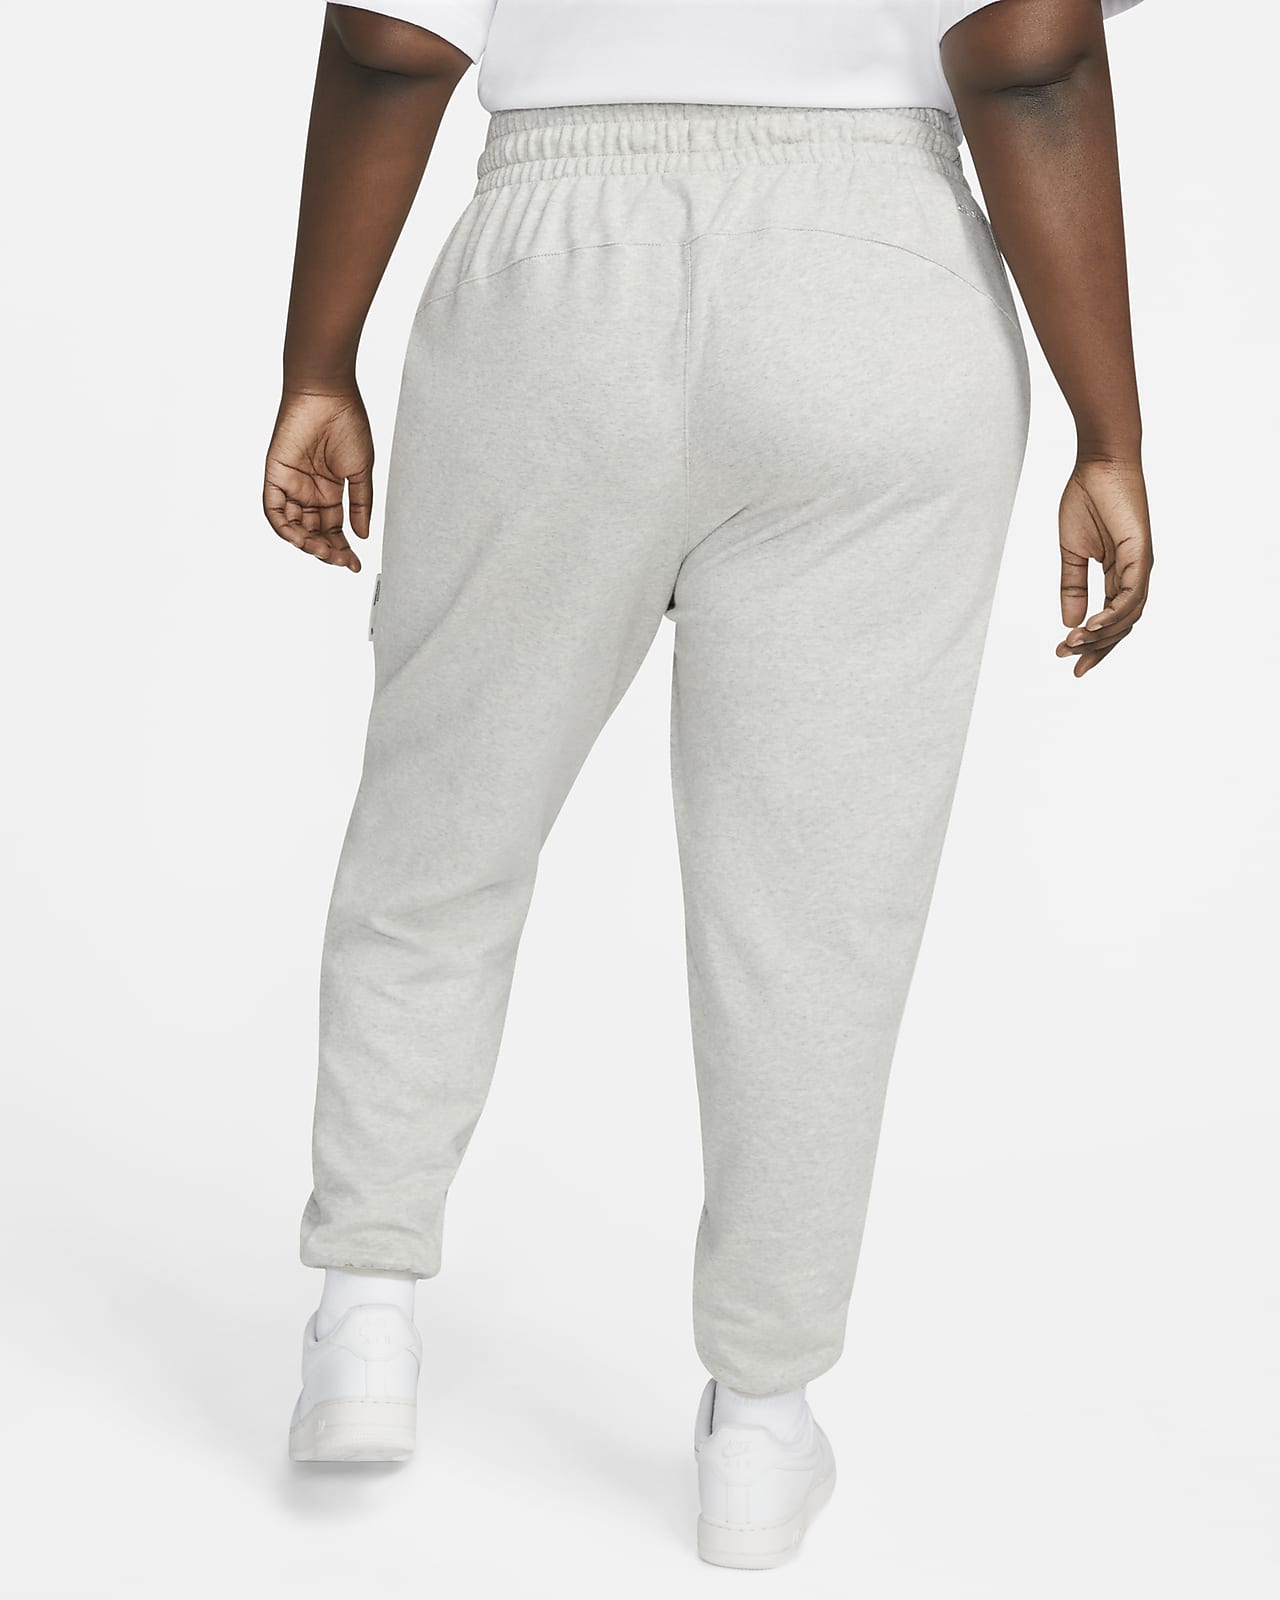 Nike Dri-FIT Swoosh Fly Issue Women's Basketball Pants (Plus Size). Nike.com